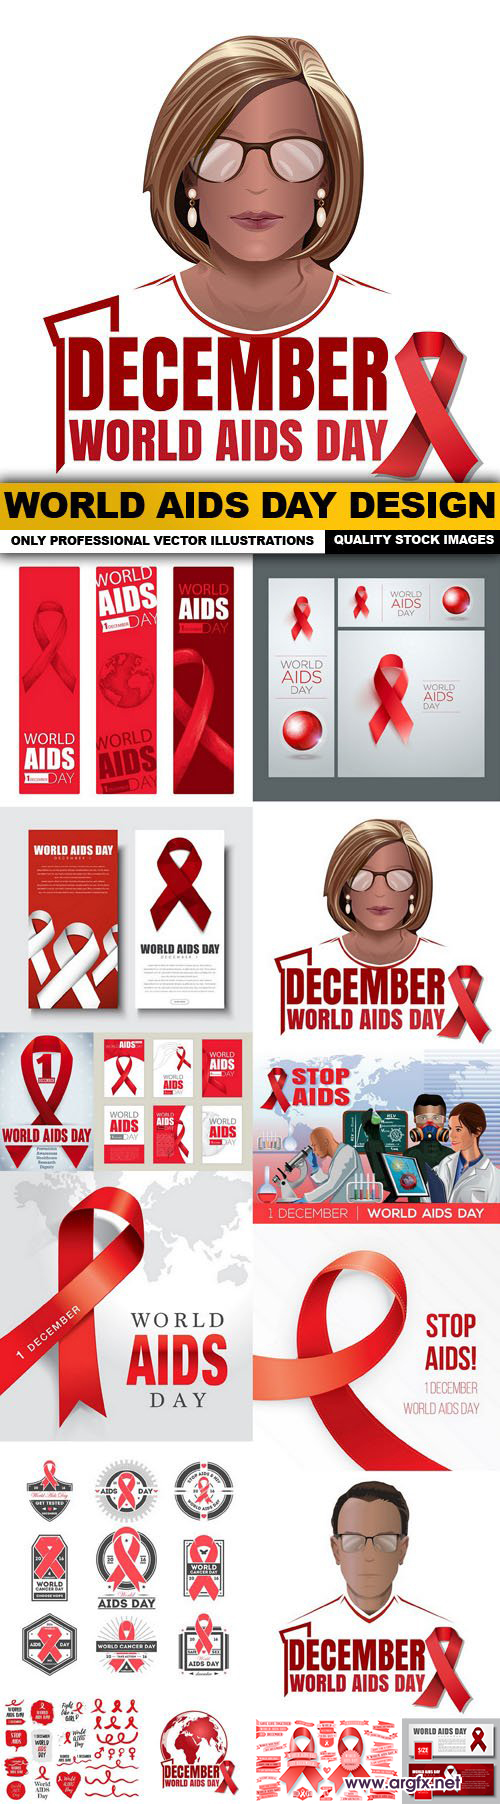  World Aids Day Design - 15 Vector